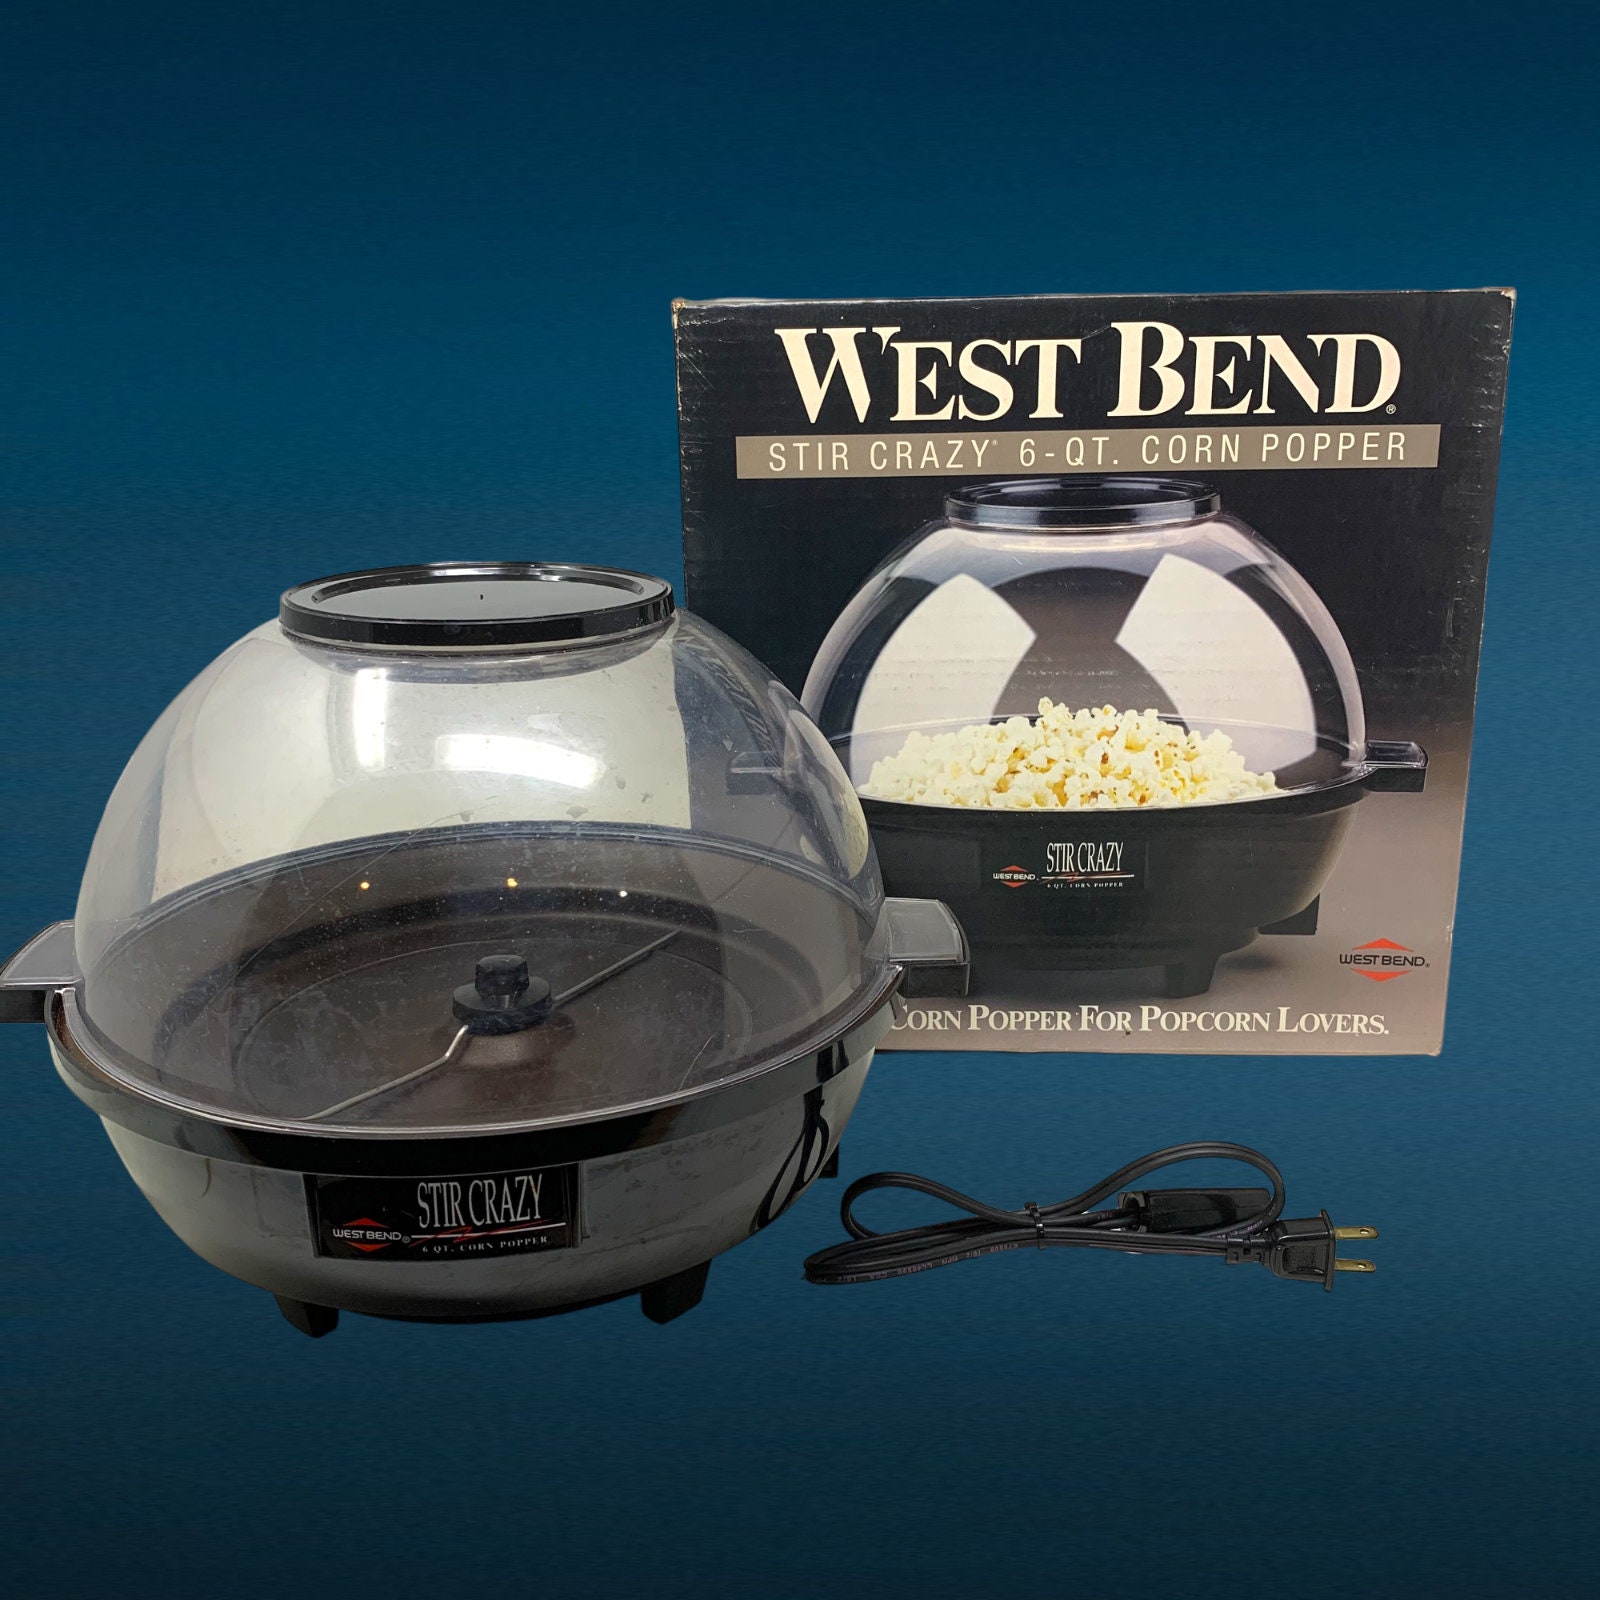 New/Open Box West Bend Stir Crazy 2 - 6 Qt Electric Popcorn Popper